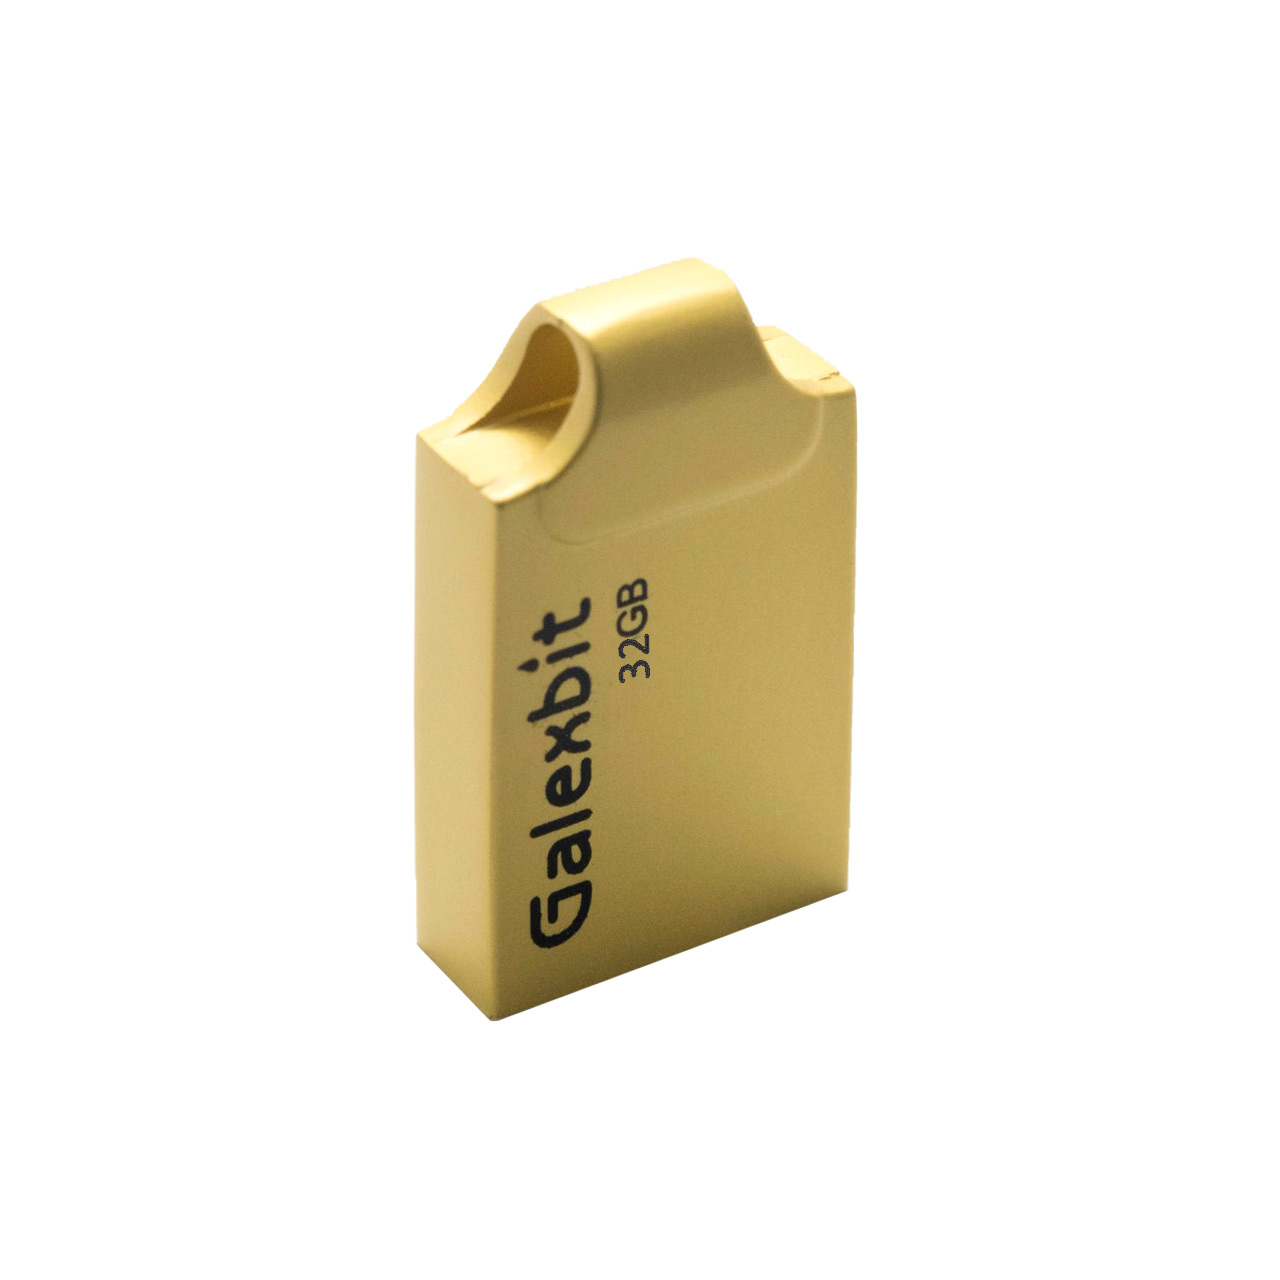 Galexbit Micro metal series M6 USB2.0 Flash Memory-32GB (گارانتی تلاش)-طلایی